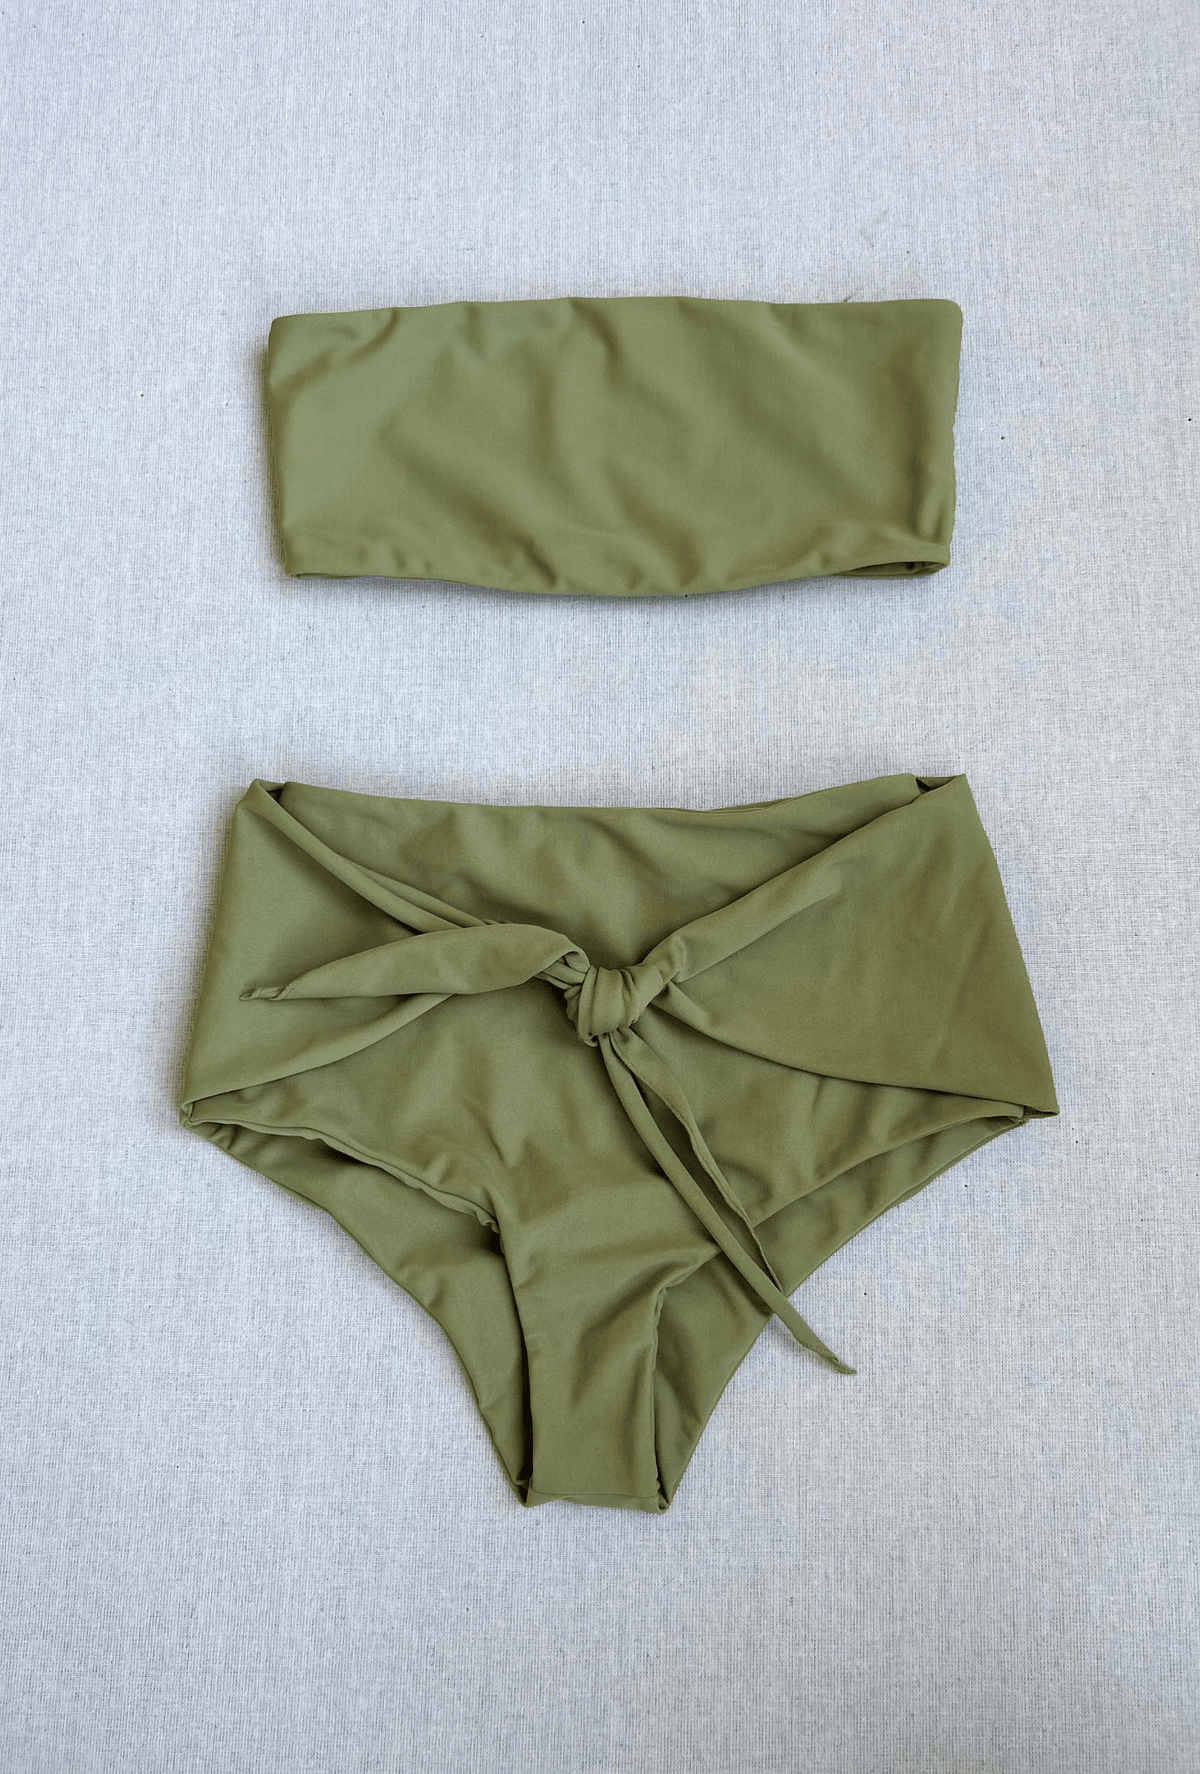 sari top / brooke bottom in olive - size xs